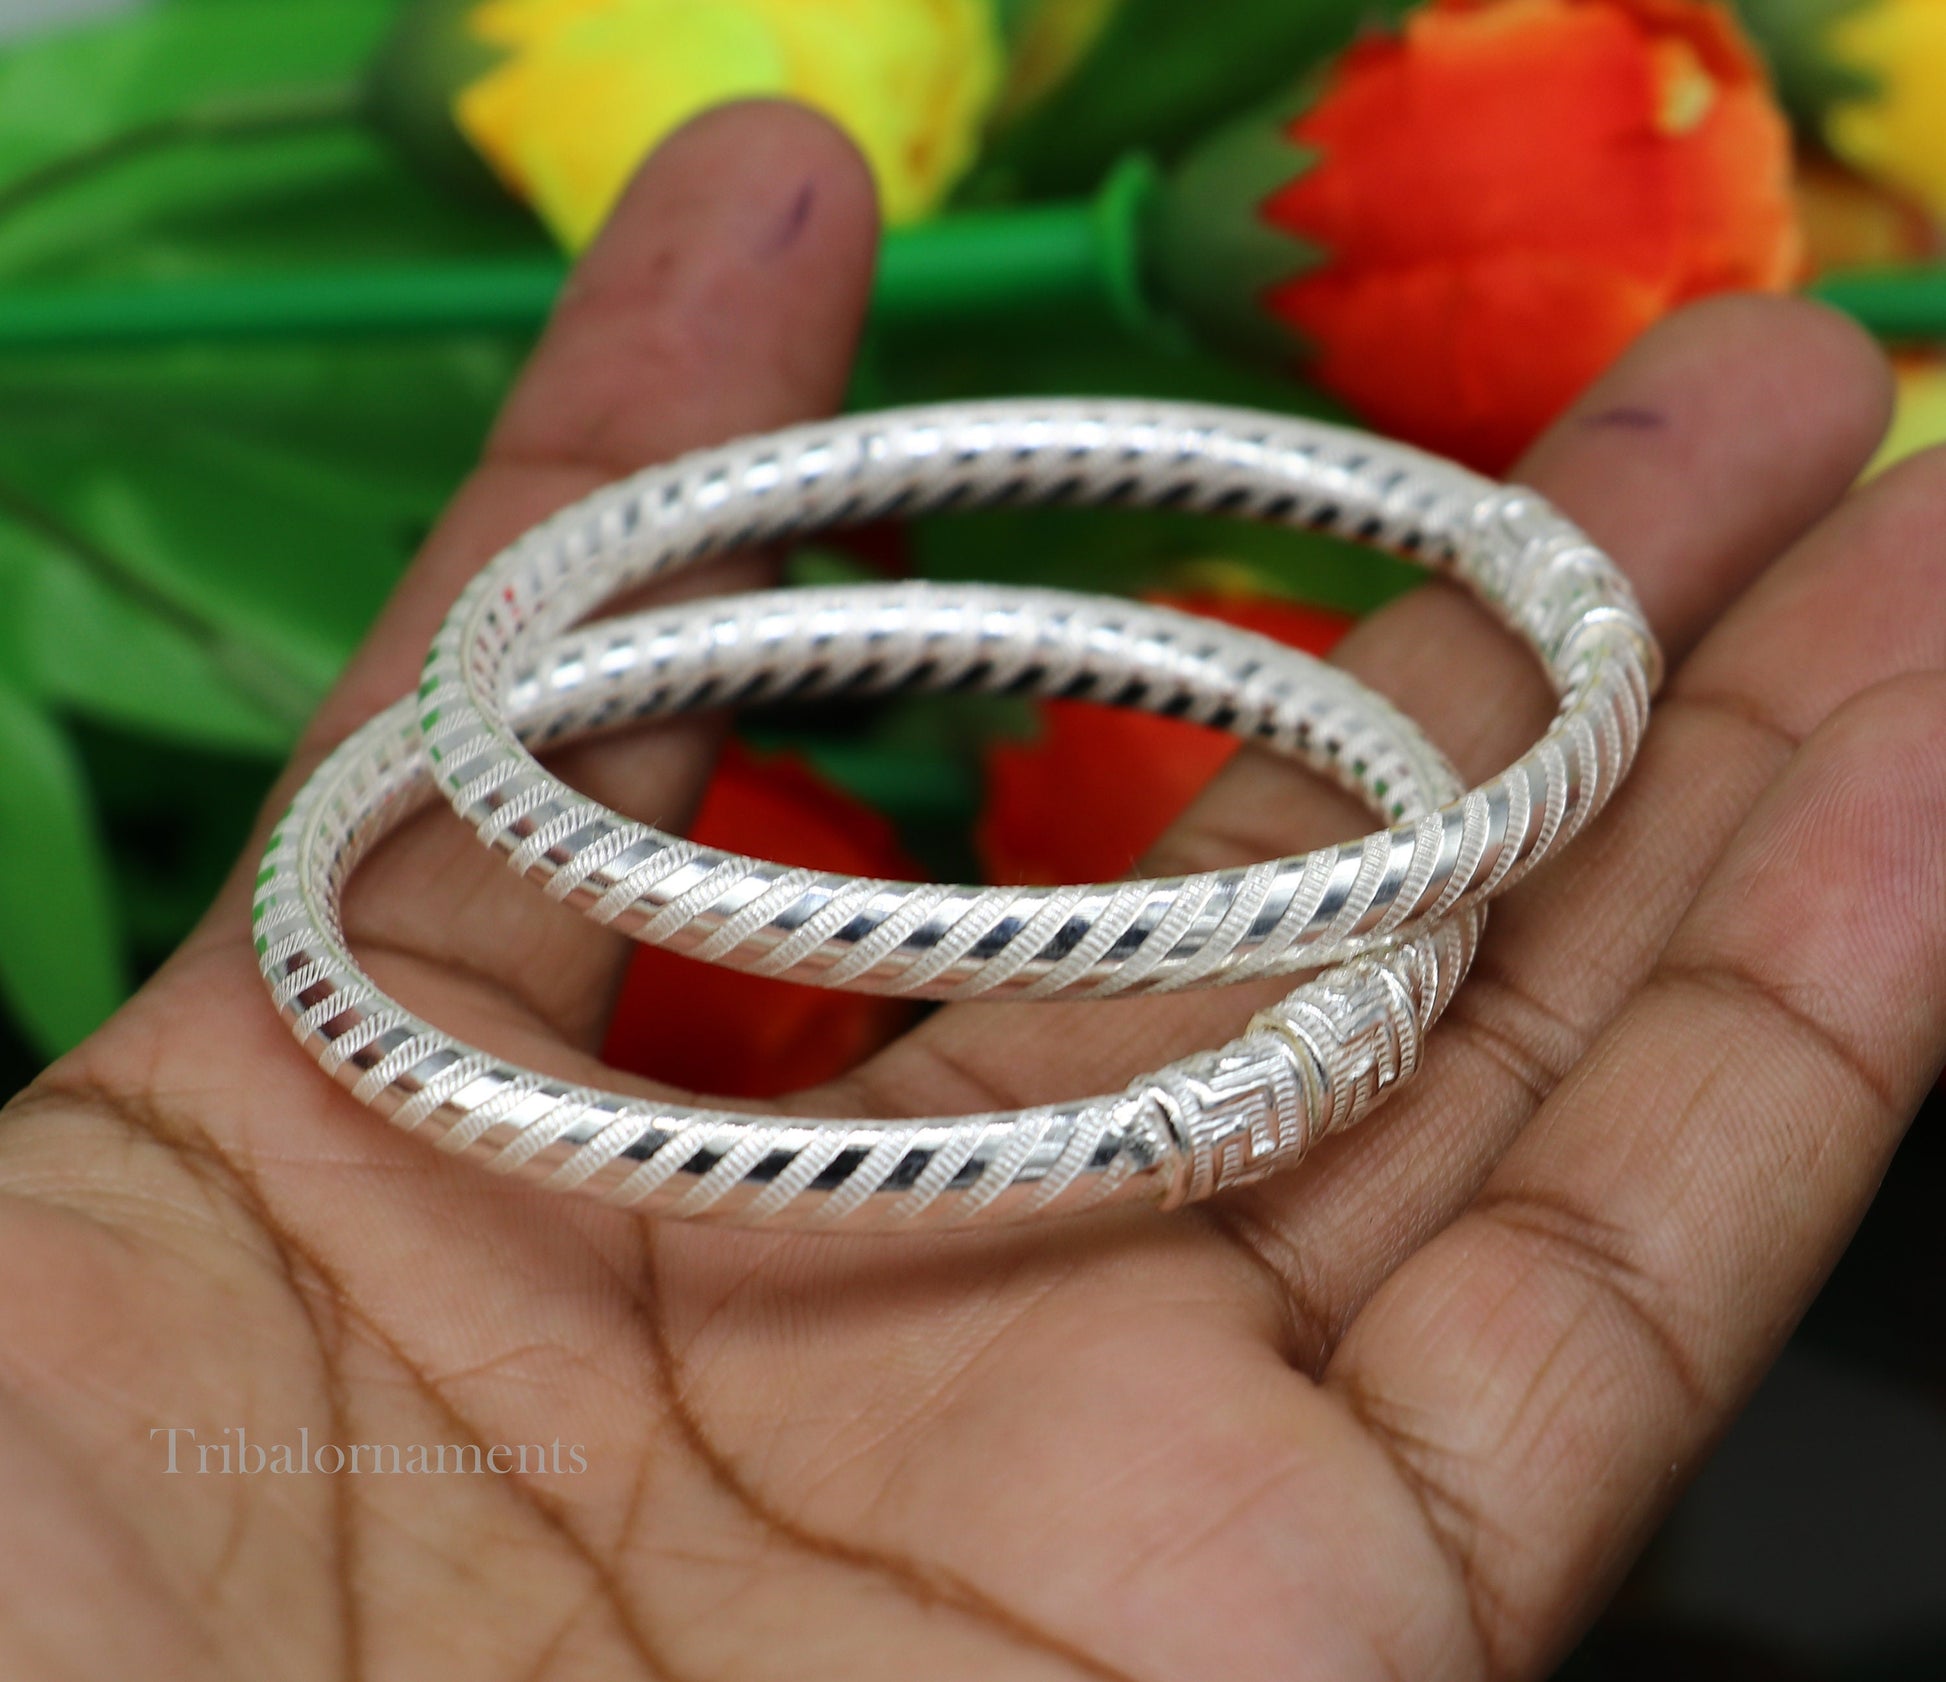 Exclusive design Sterling silver amazing bangle bracelet kangan chudi, excellent customized design bangle kada gift tribal jewelry nba204 - TRIBAL ORNAMENTS